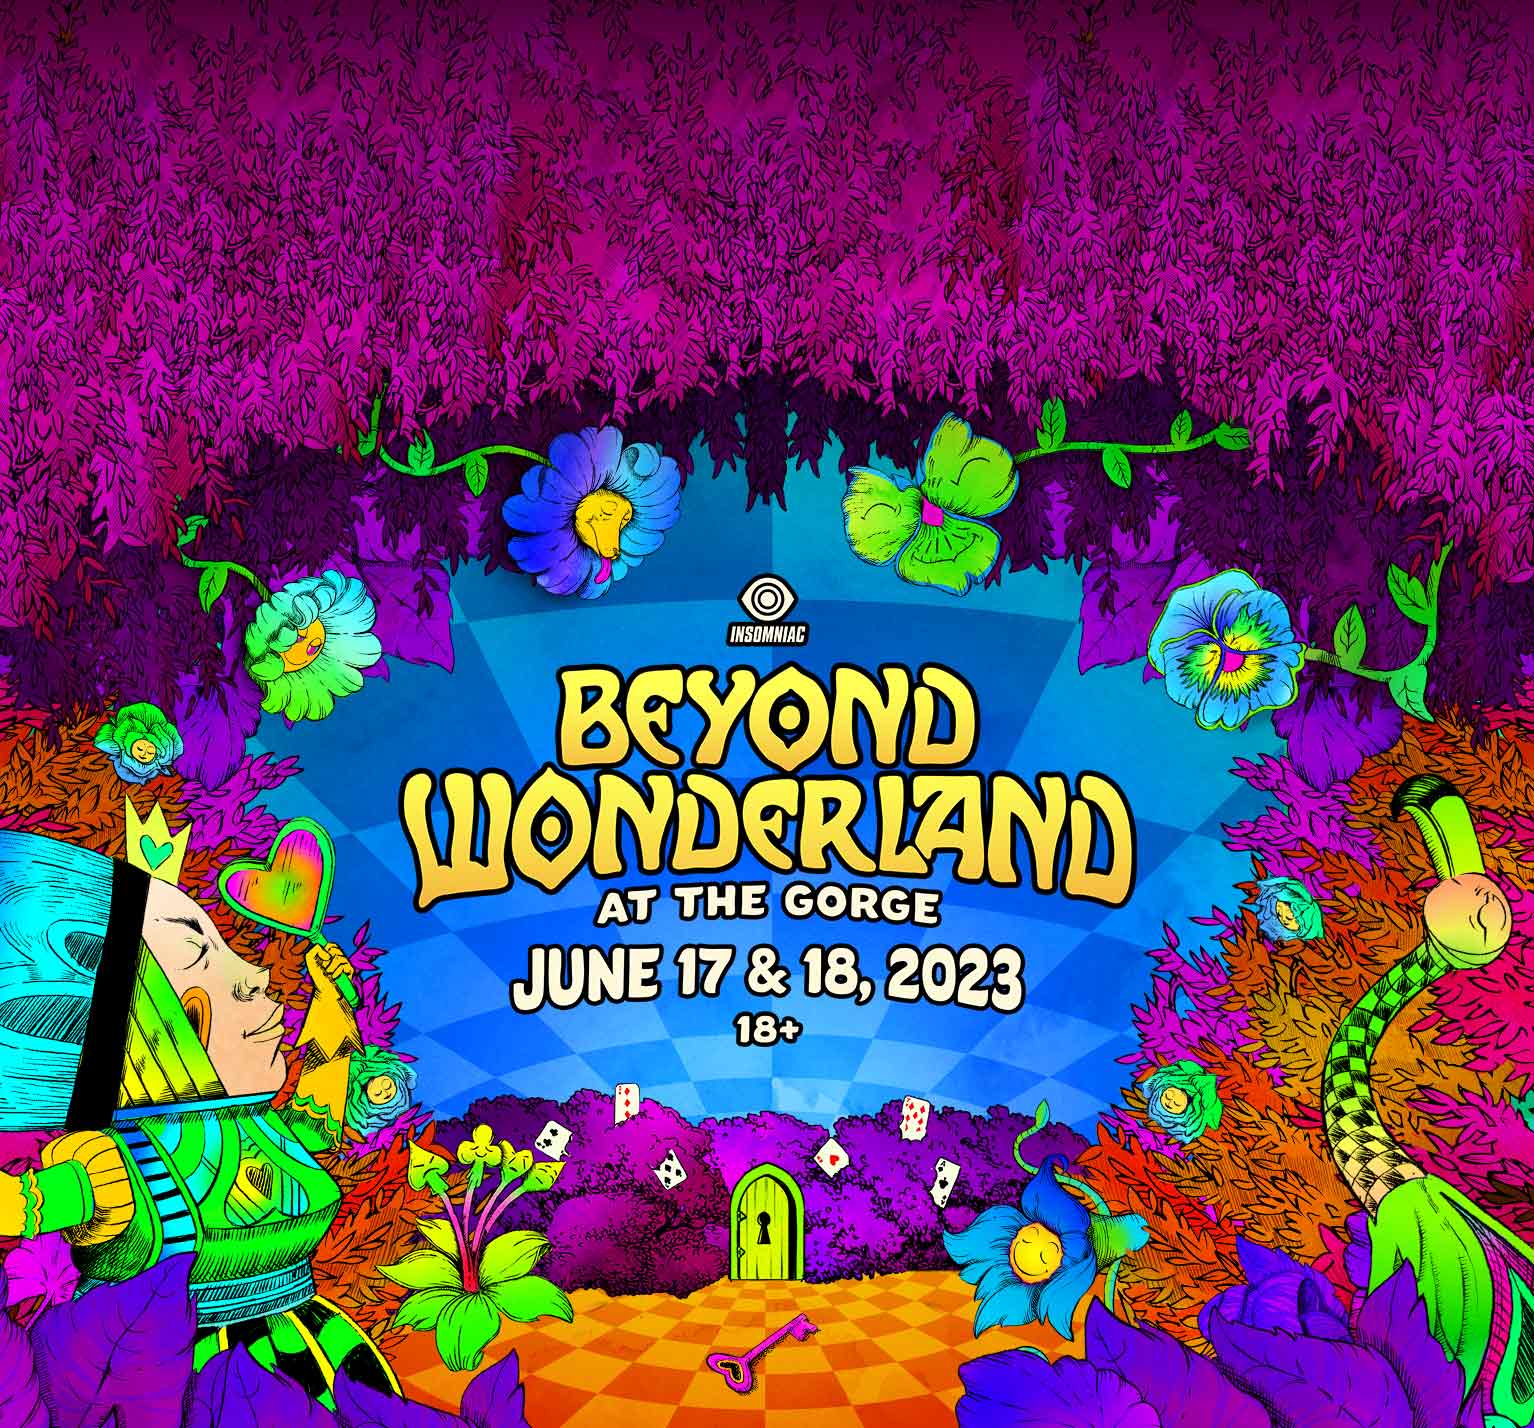 beyond wonderland 2021 location